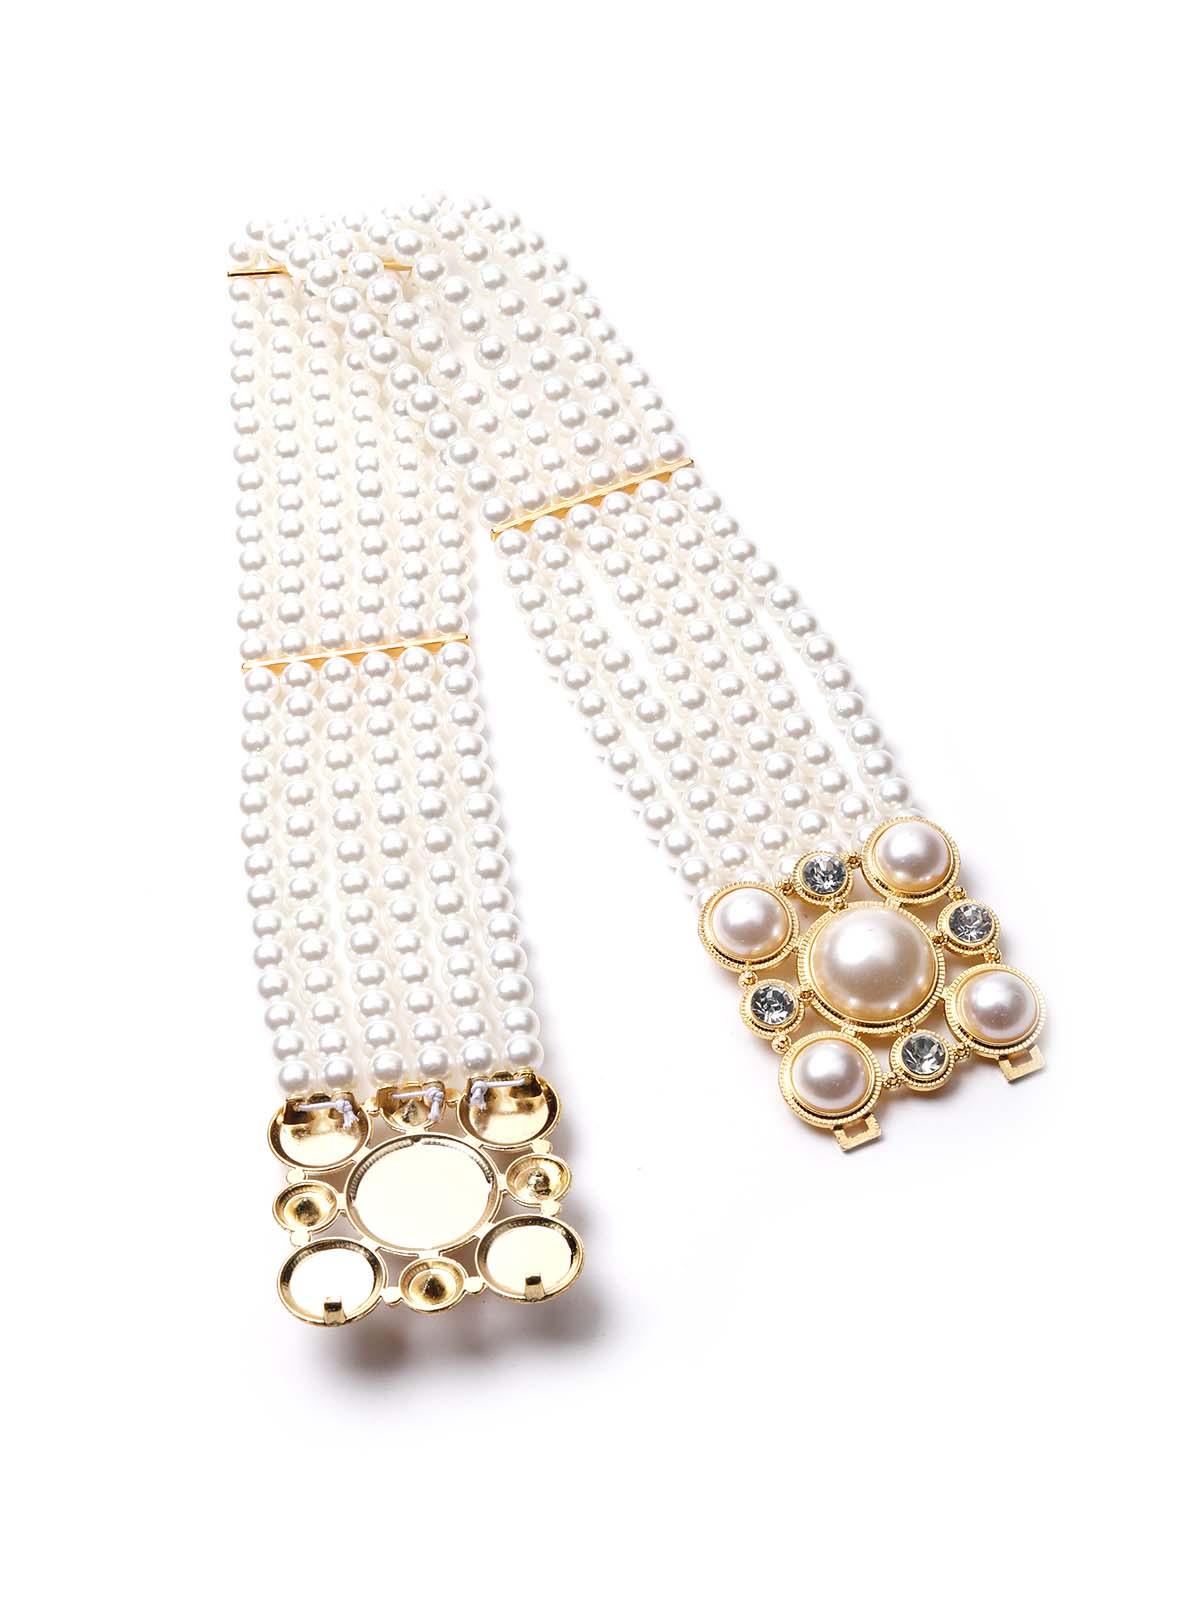 Stylish white pearl studded belt. - Odette